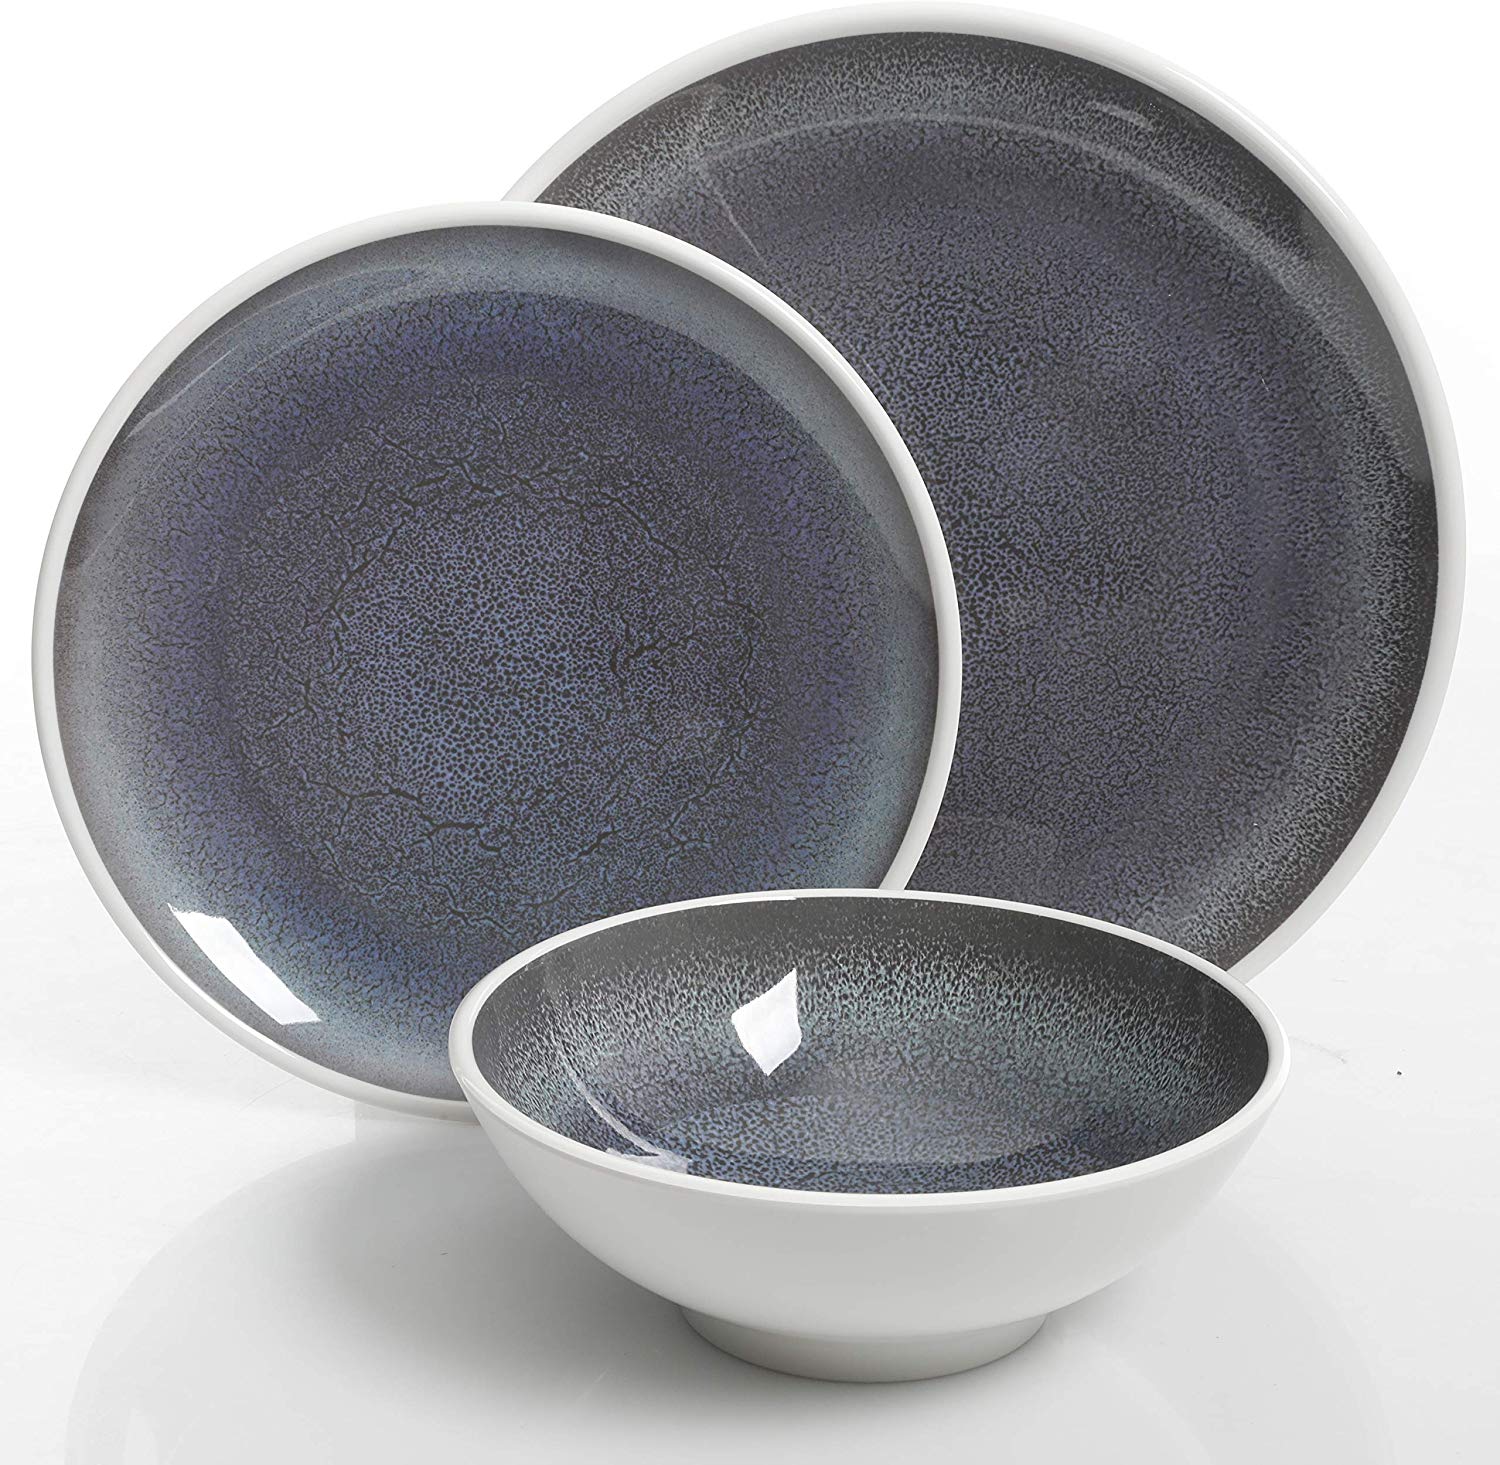 melamine-plastic-dinnerware-gray